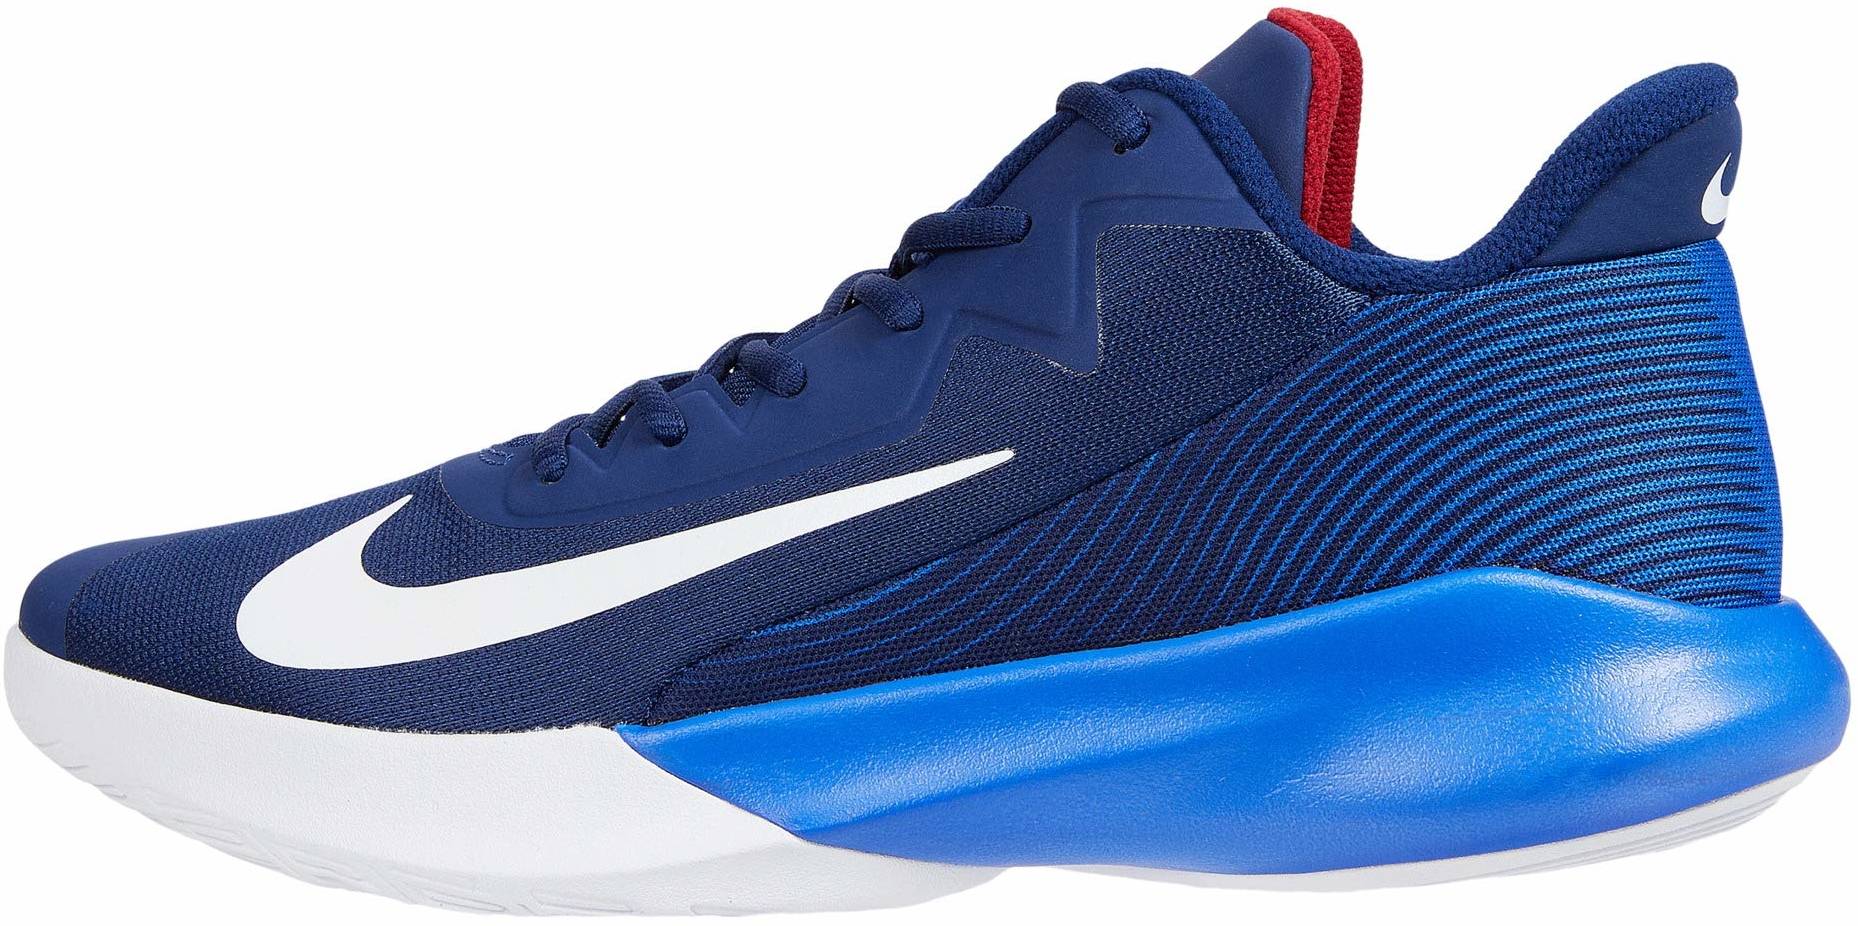 blue nike shoes basketball